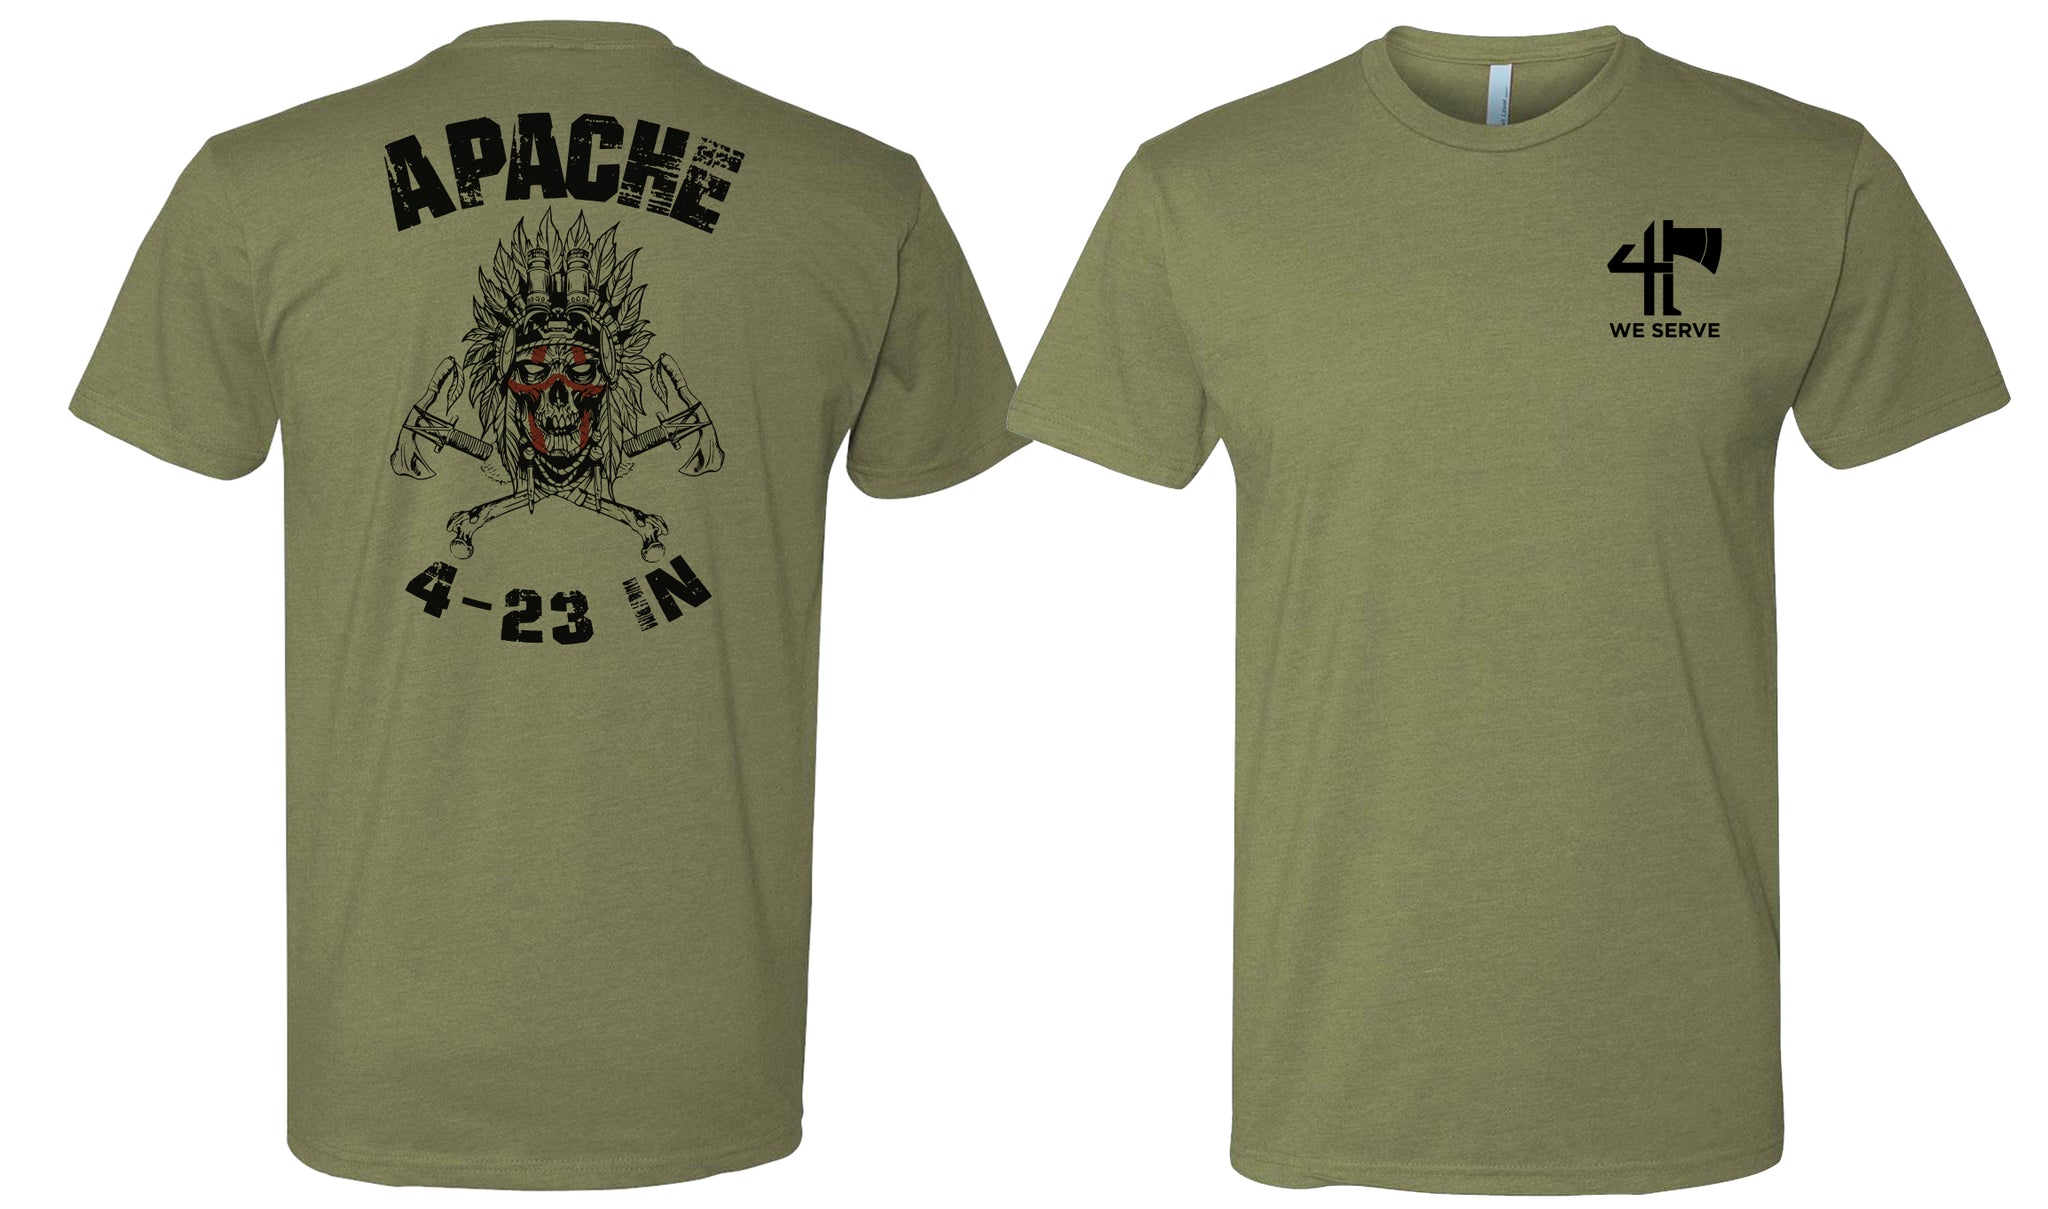 4-23 IN Apache Tee